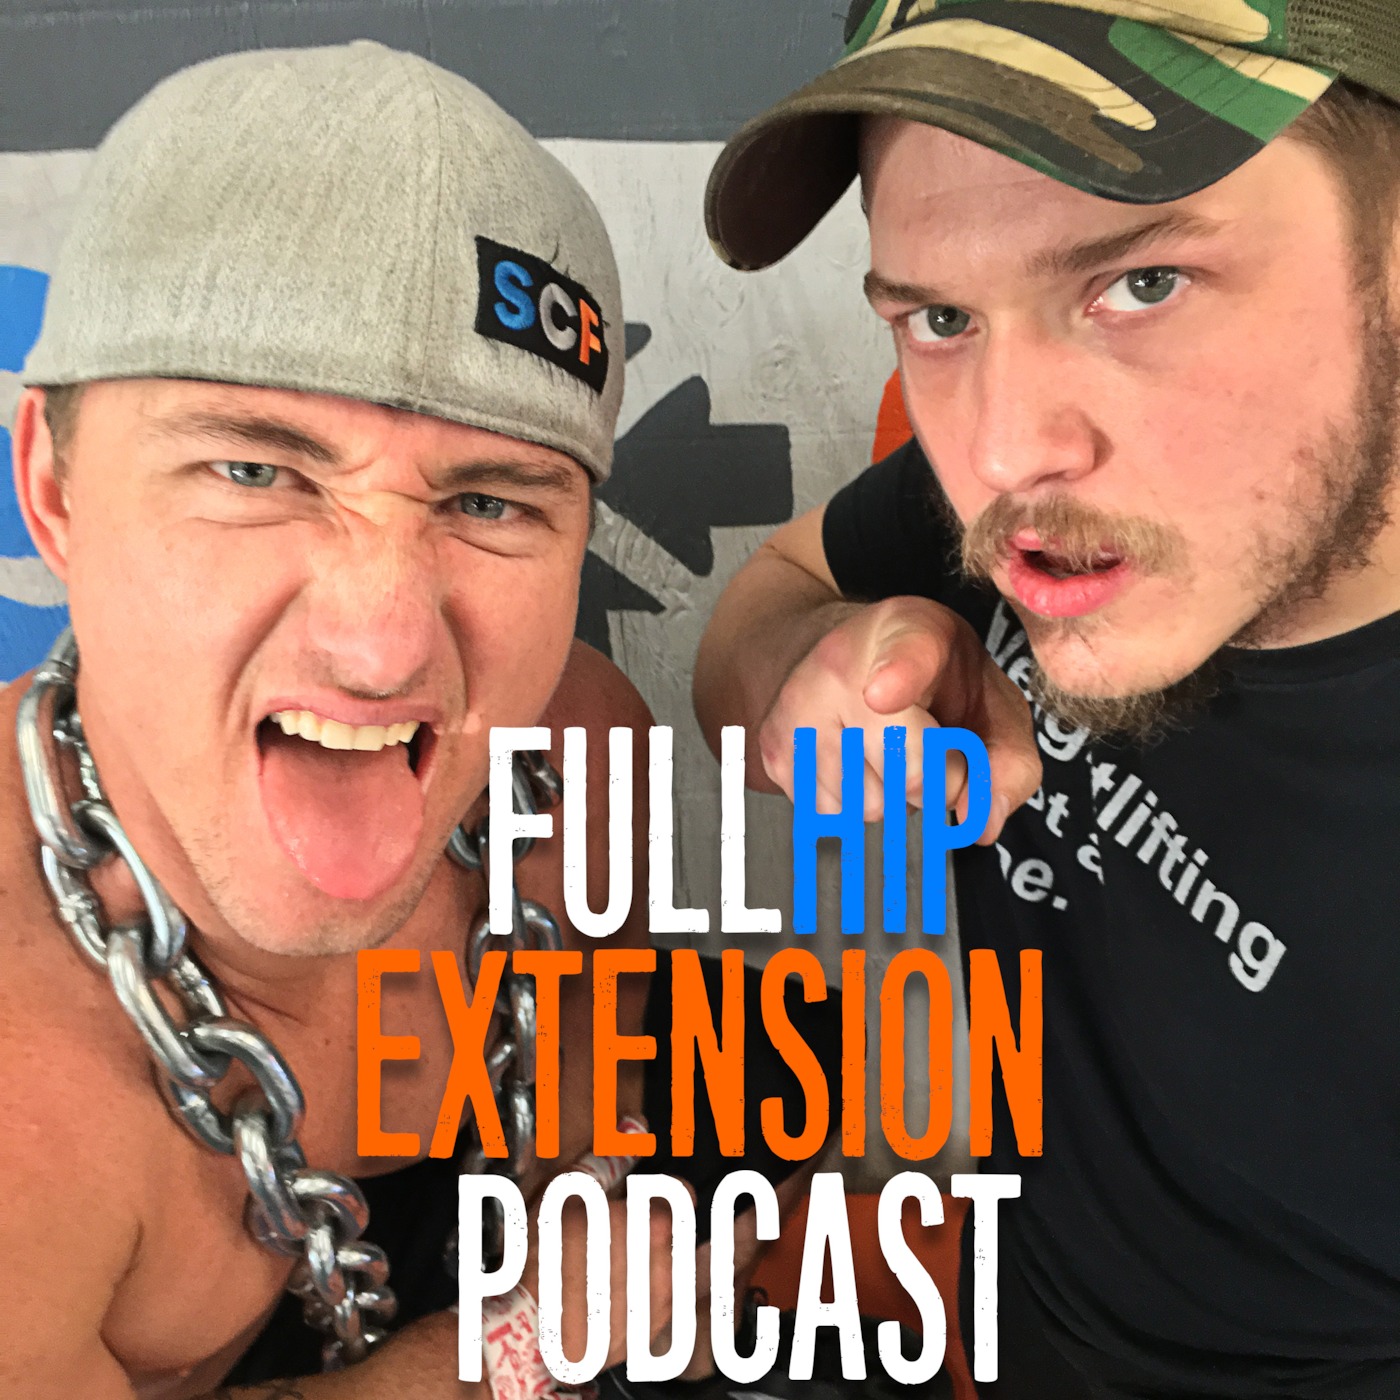 Full Hip Extension Podcast